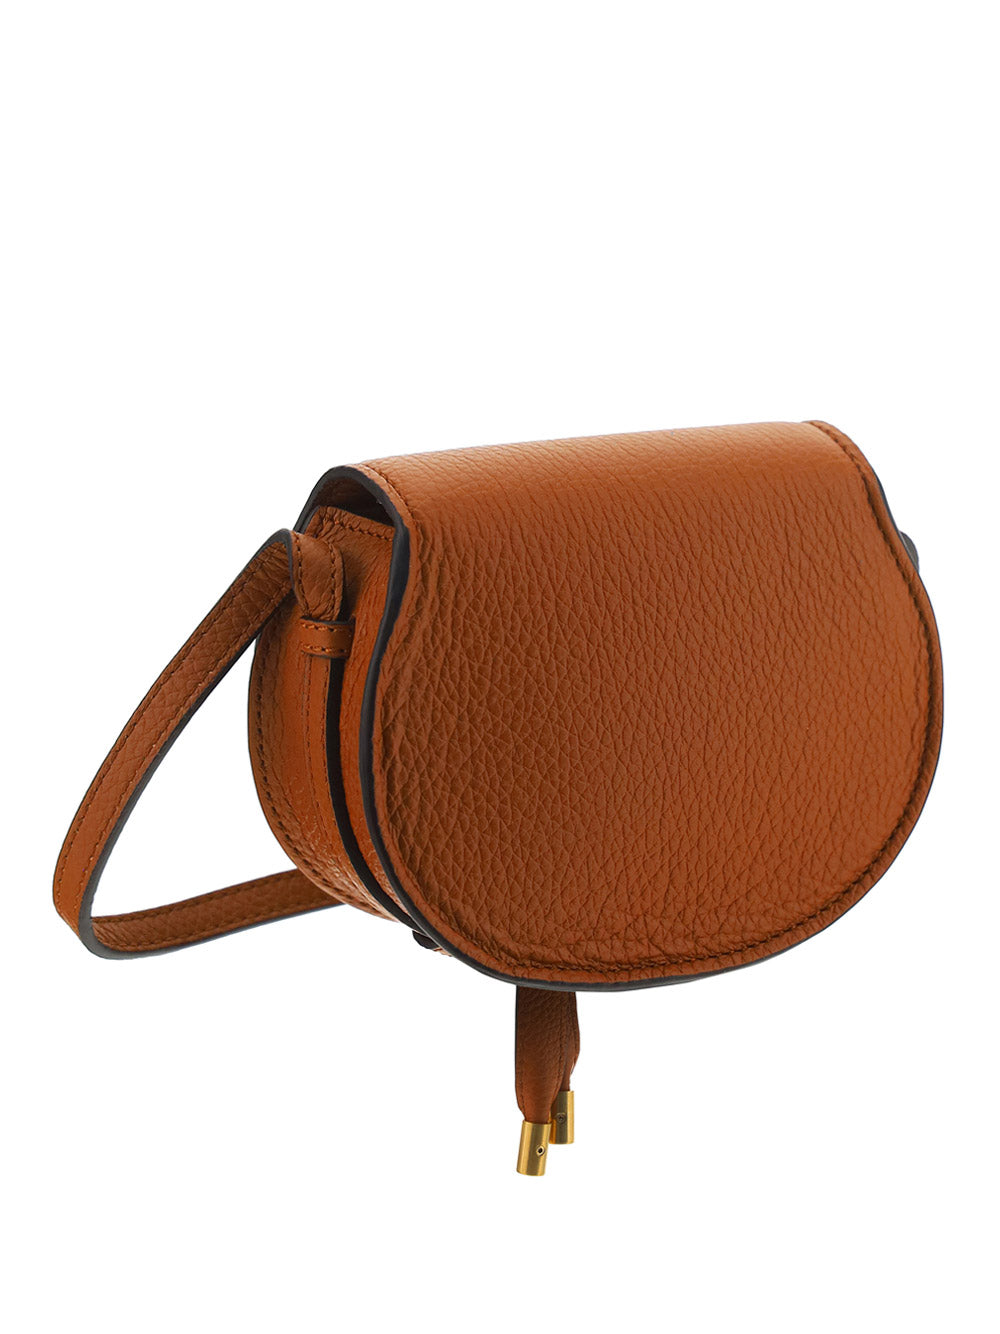 Marcie Nano Saddle Bag in Grained Calfskin - Tan